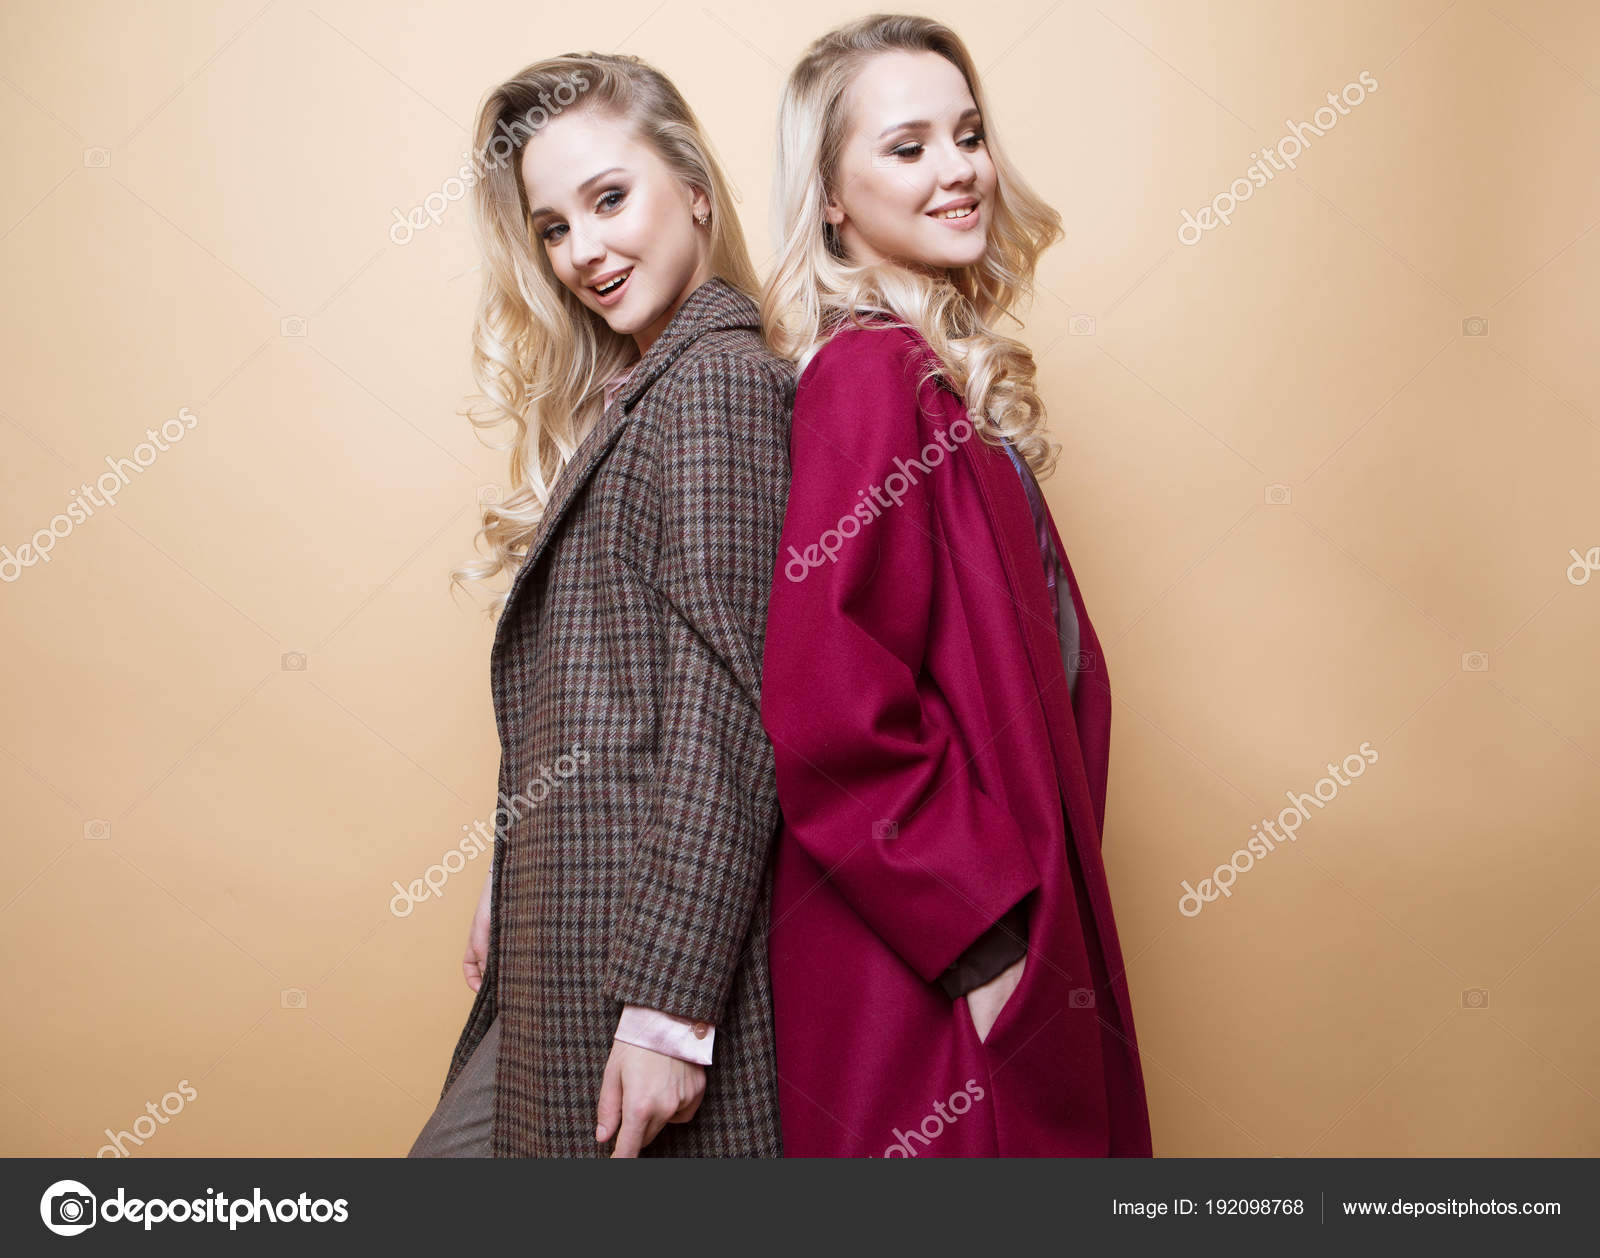 depositphotos 192098768 stock photo fashion portrait of two girls